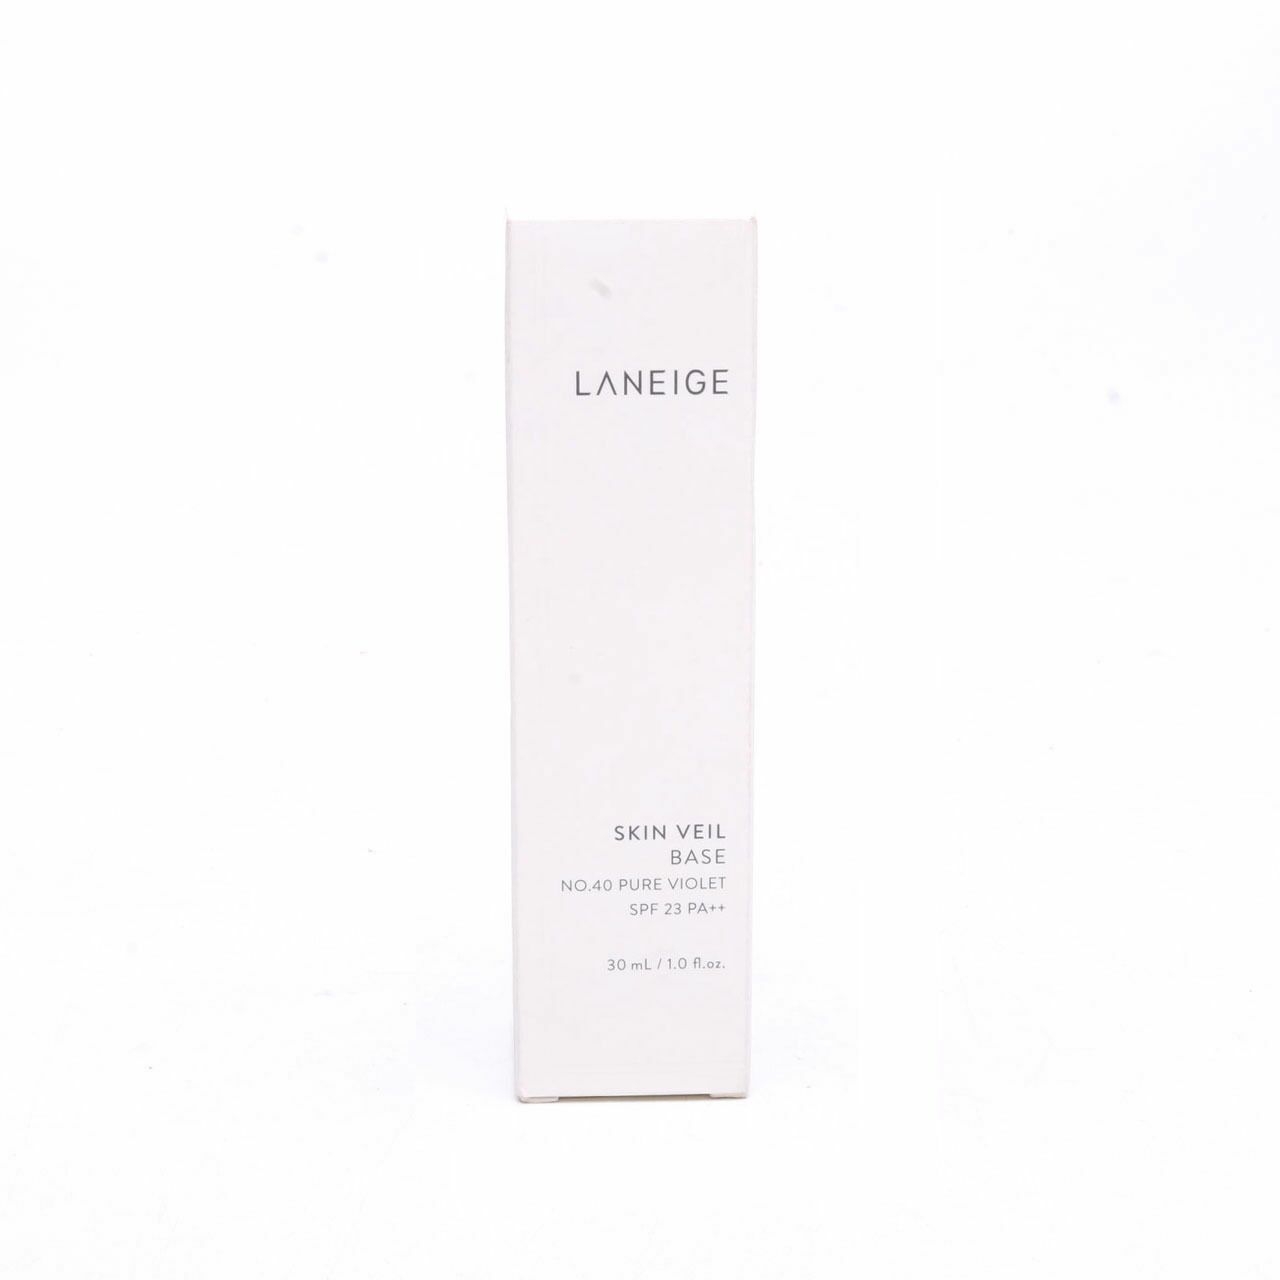 Laneige Skin Veil Bse No.40 Pure Violet SPF 23 PA++ Faces